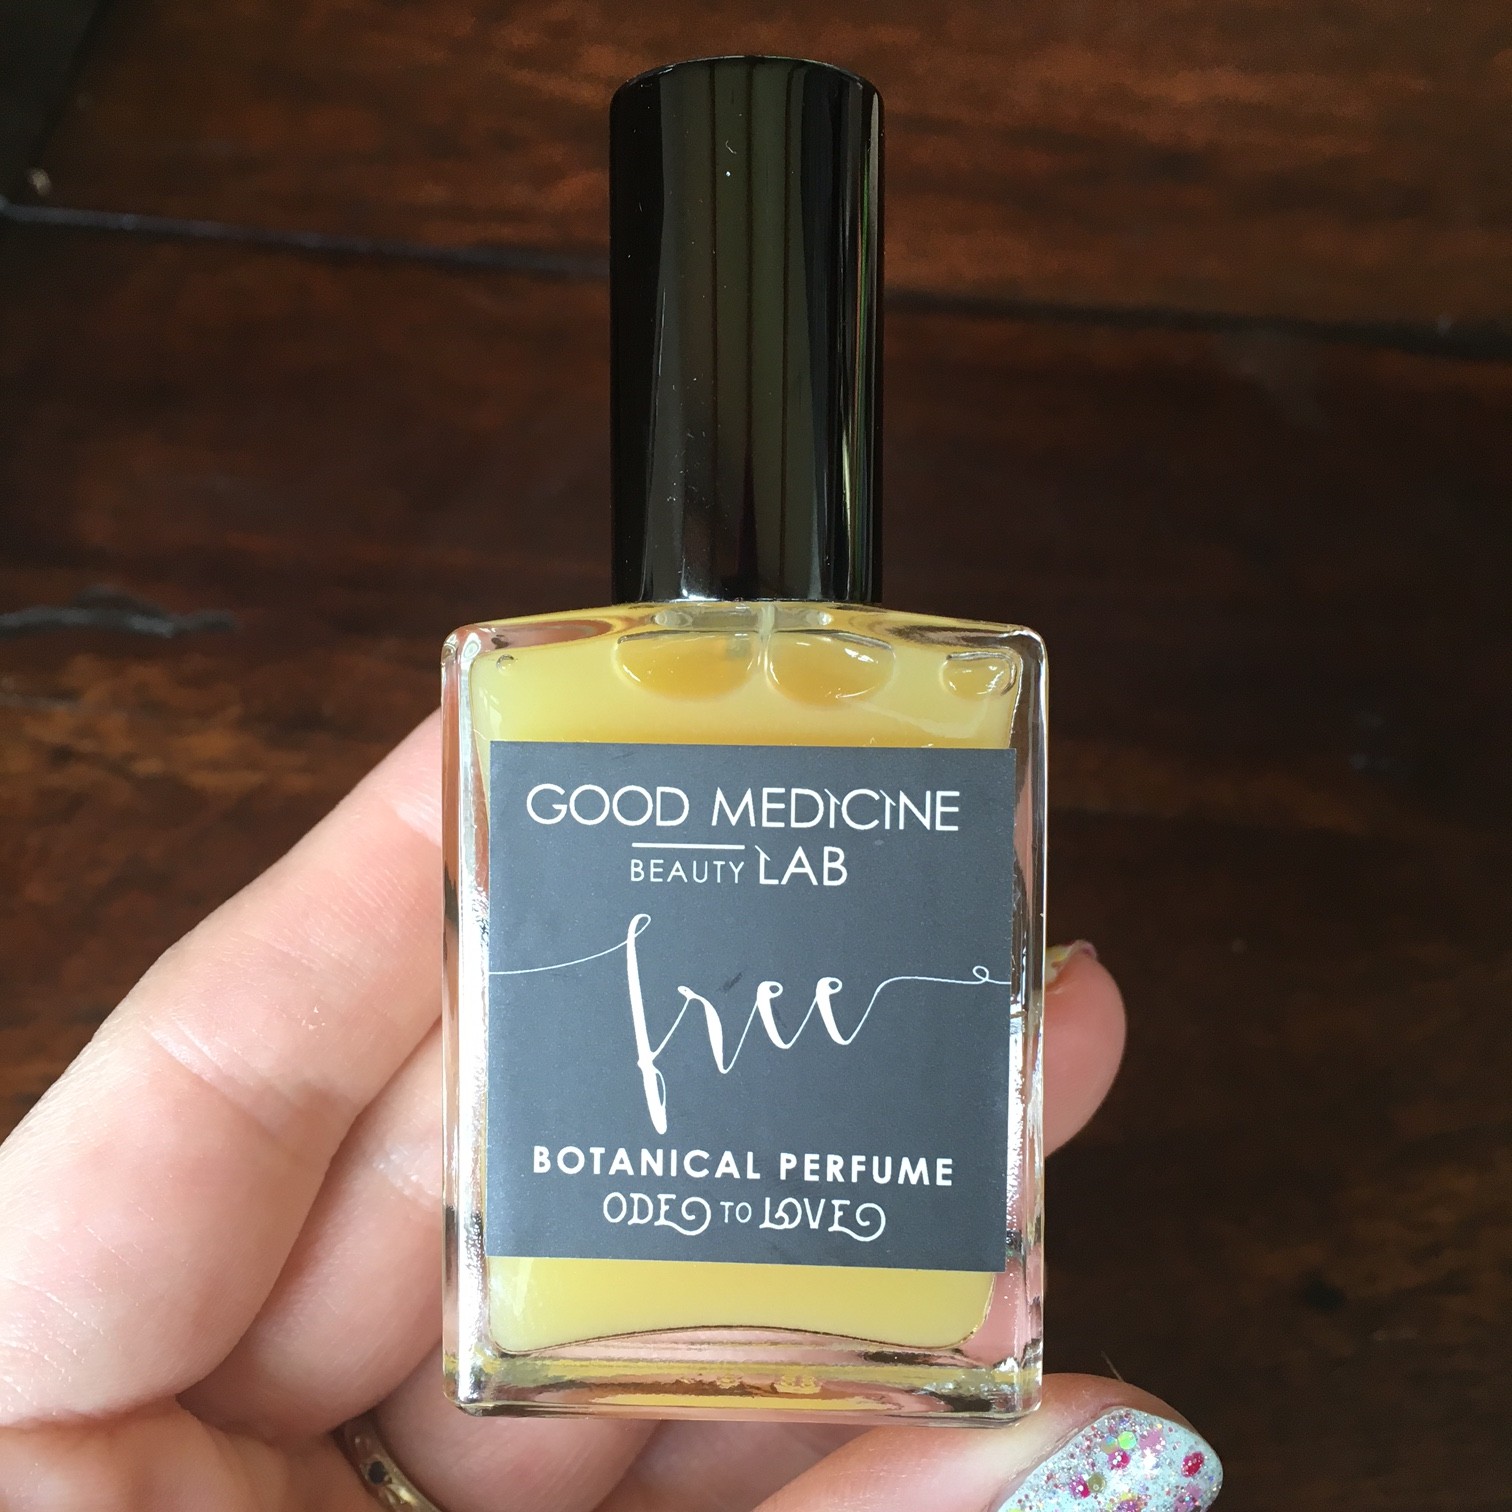 Good Medicine Beauty Lab perfume